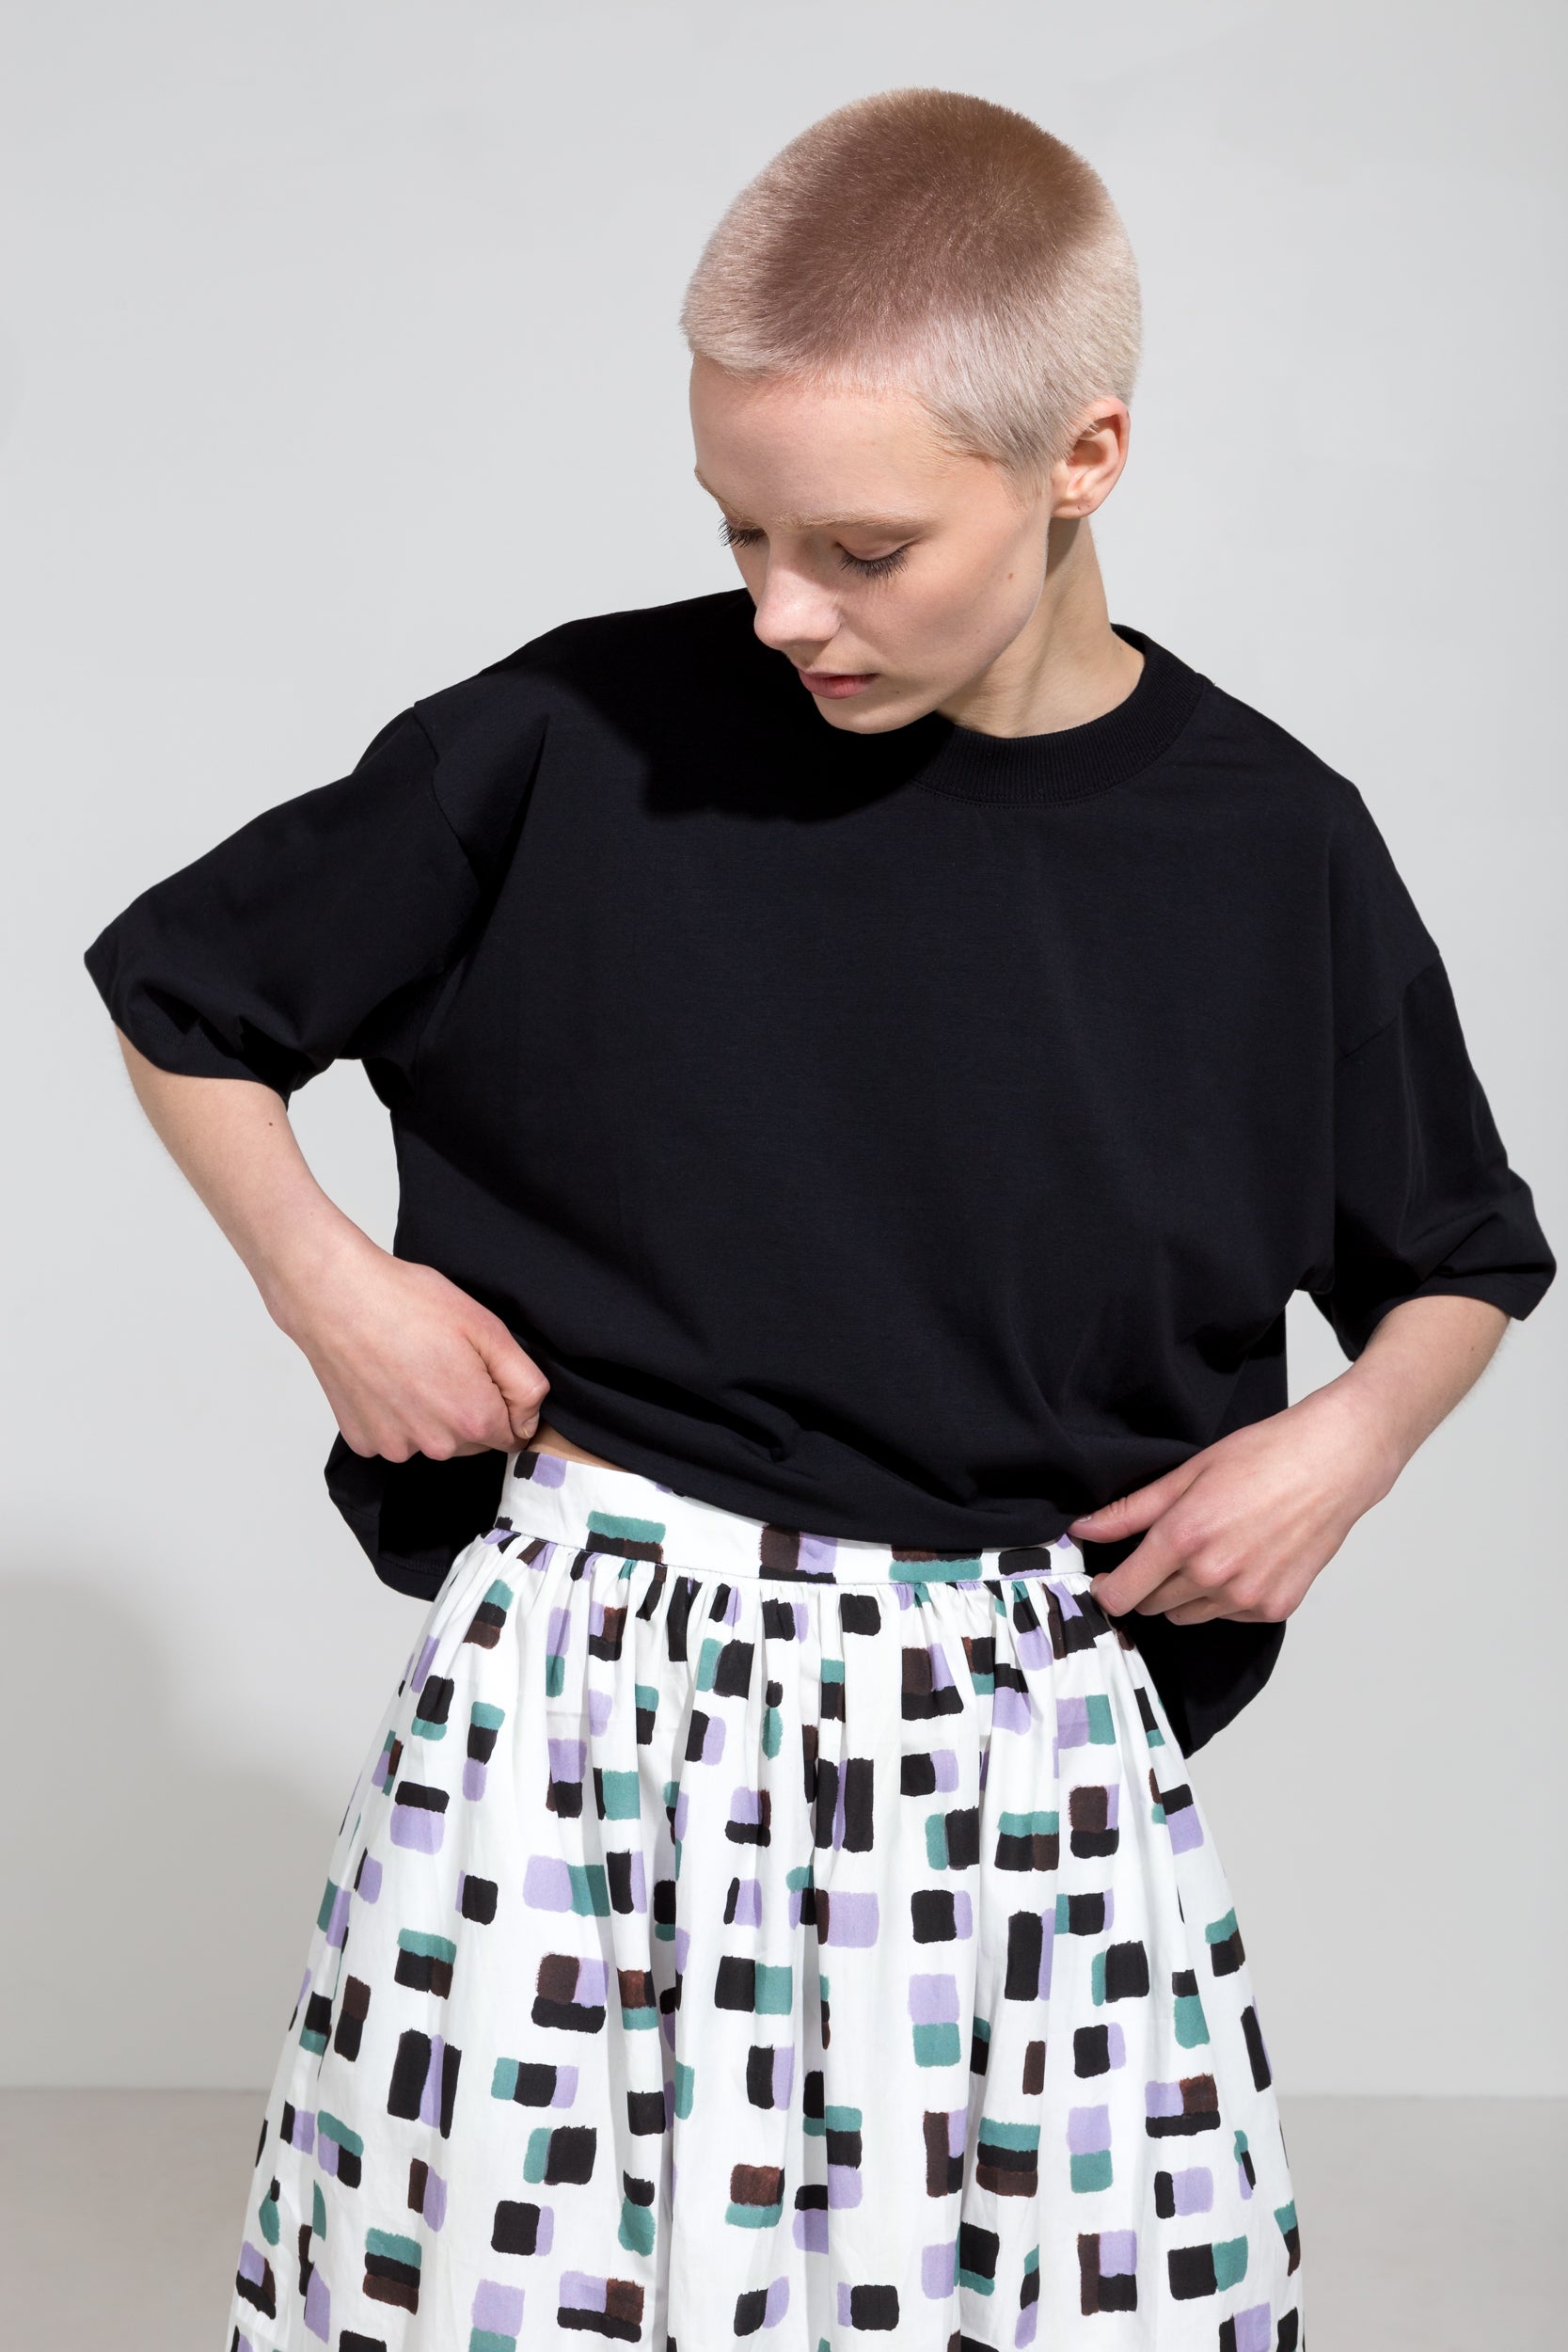 Voluminous below the knee length skirt in print and organic cotton black oversize t-shirt